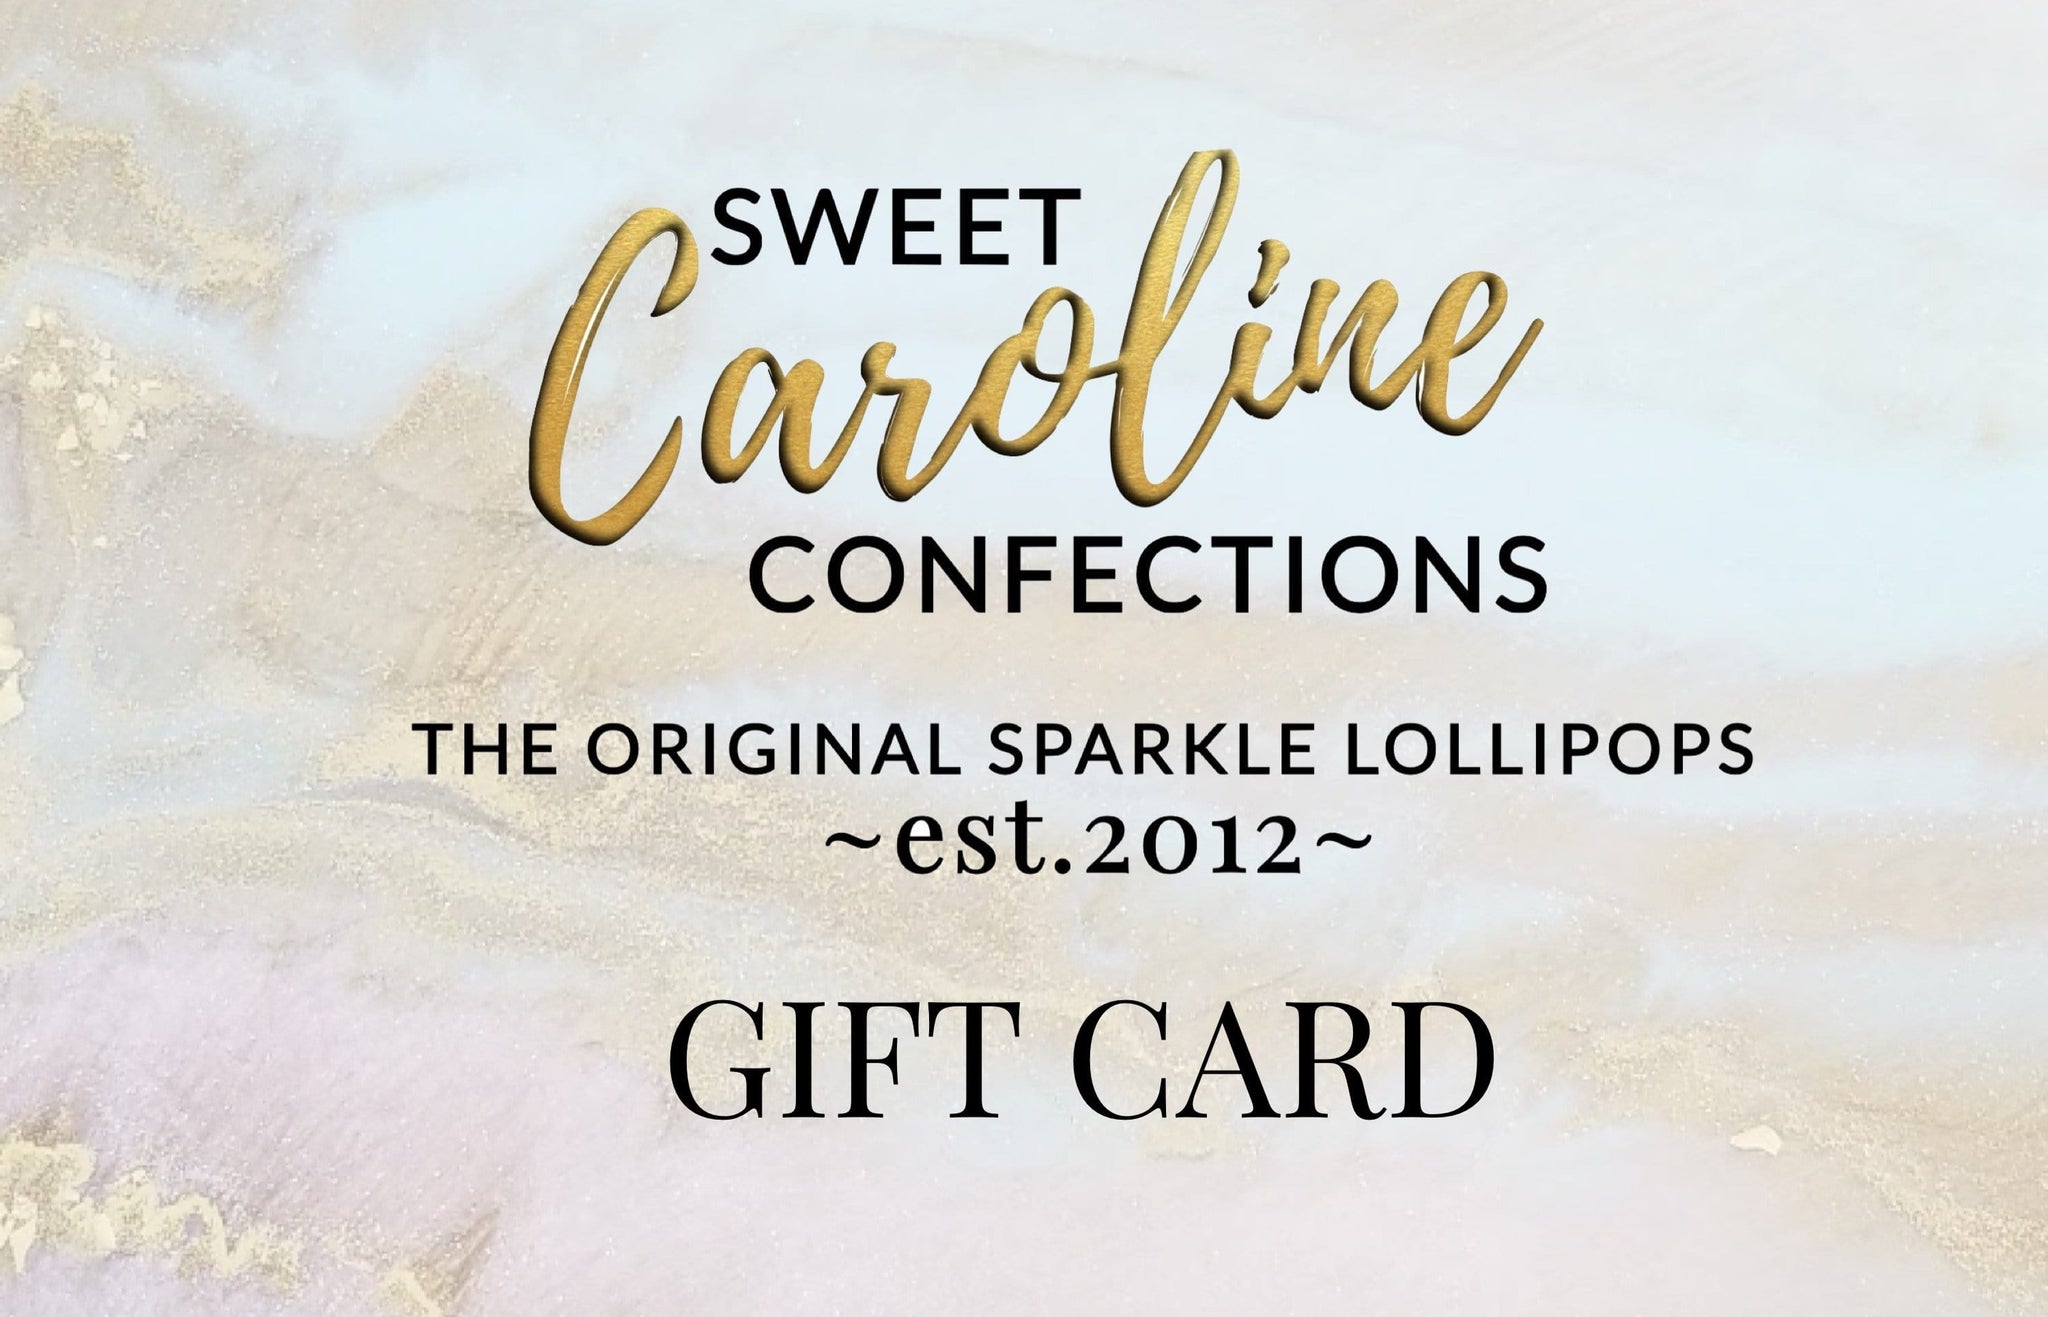 Gift Card, Immediate Download via Email - Sweet Caroline Confections | The Original Sparkle Lollipops